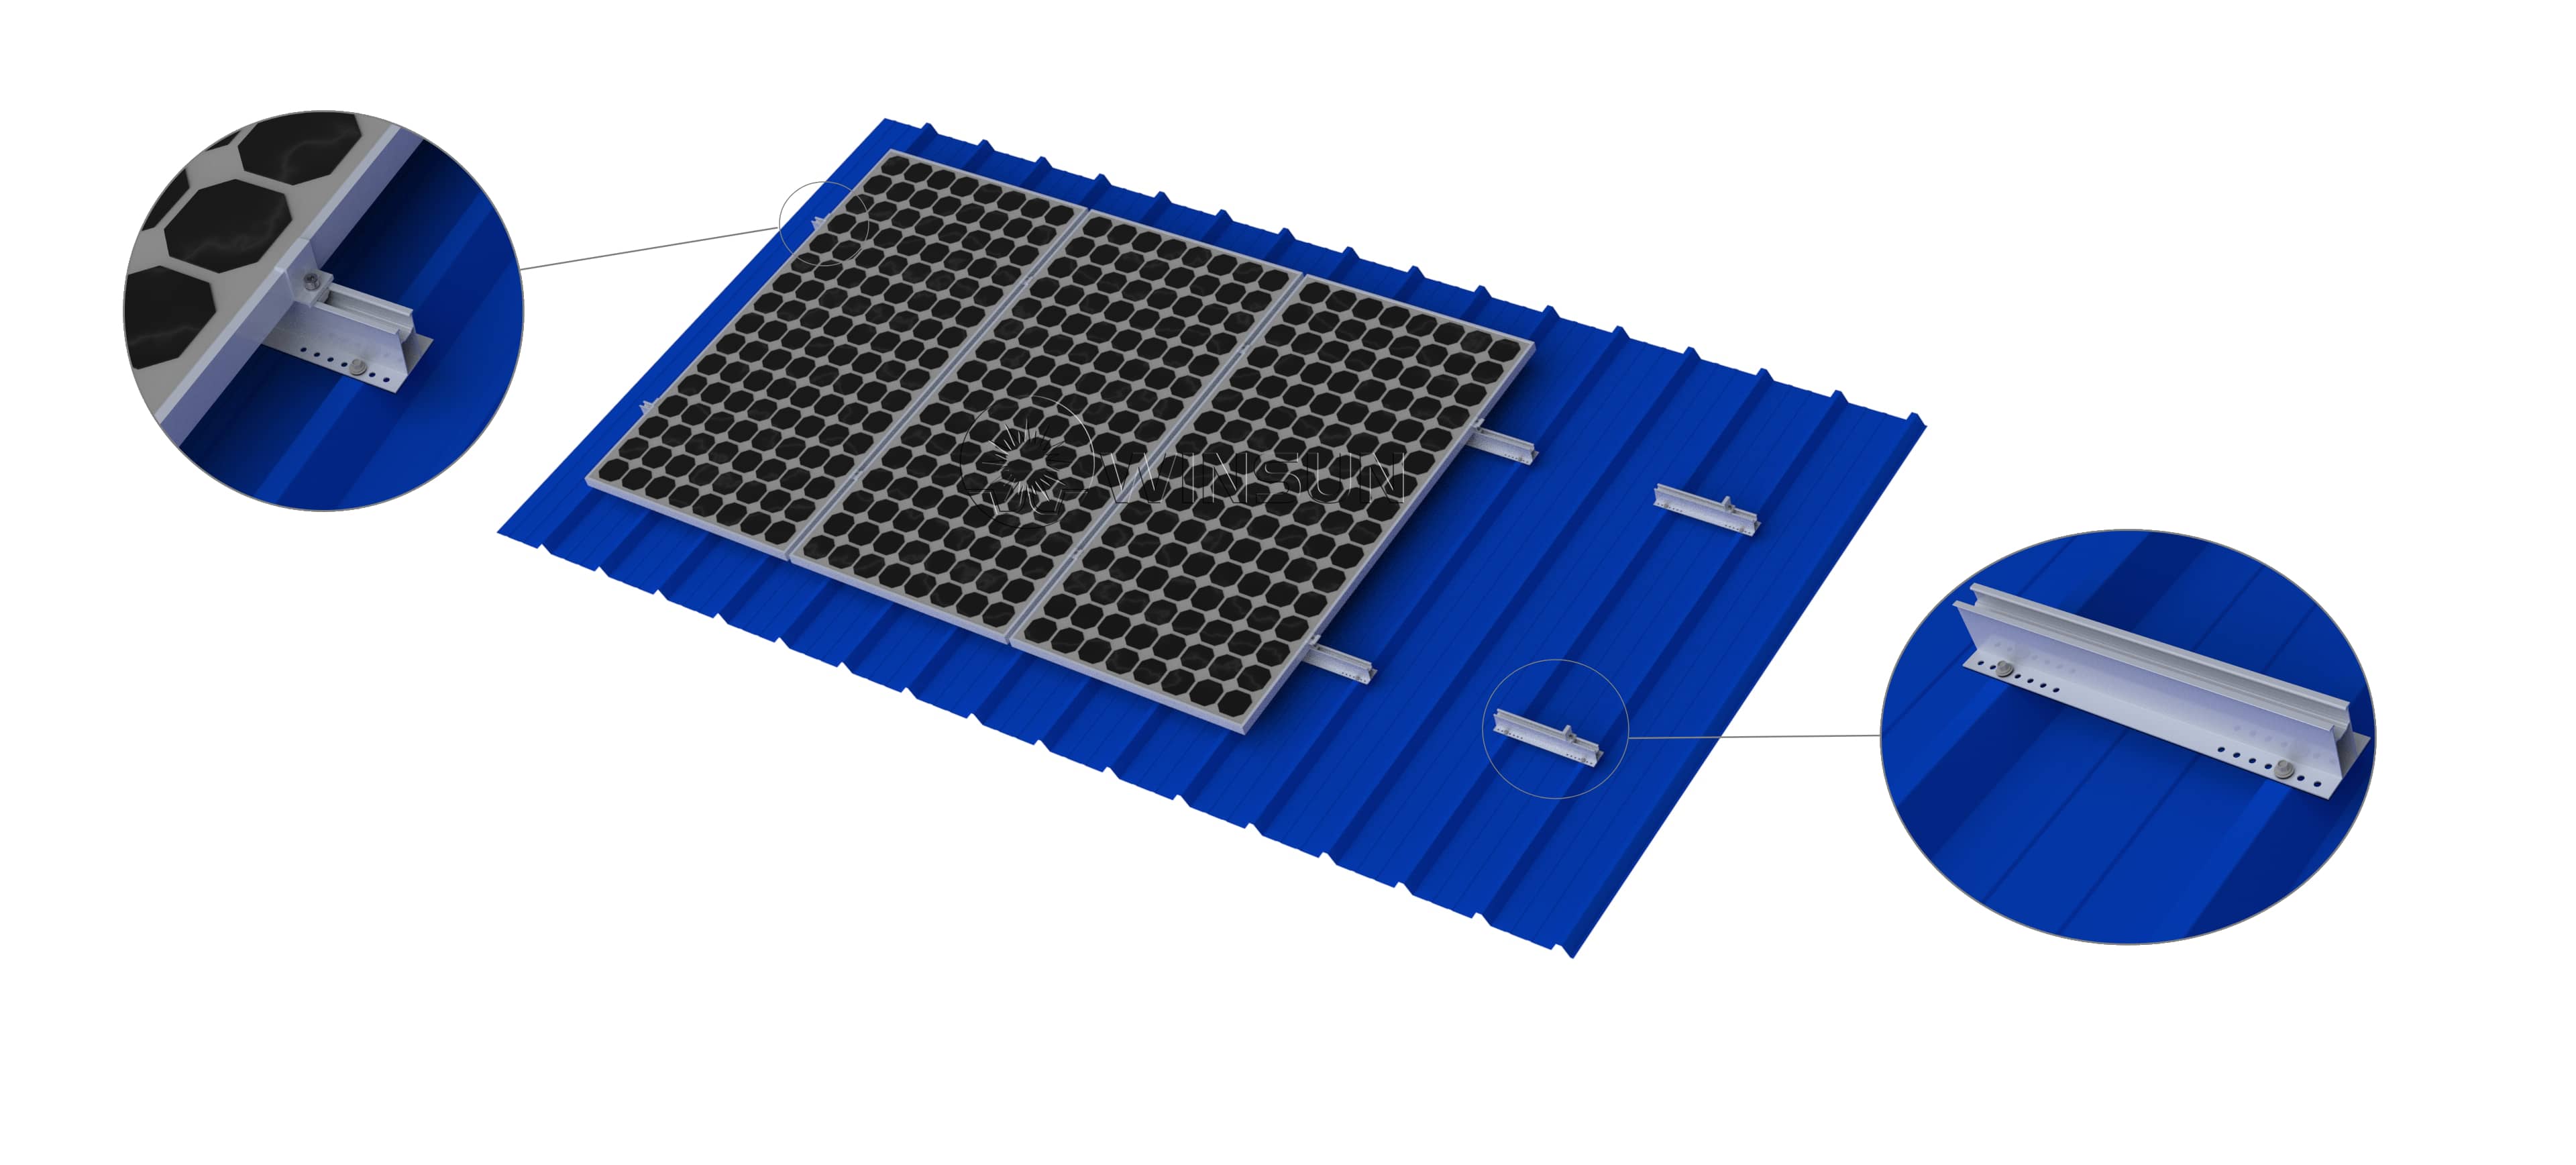 solar panel mounting brackets corrugated roof